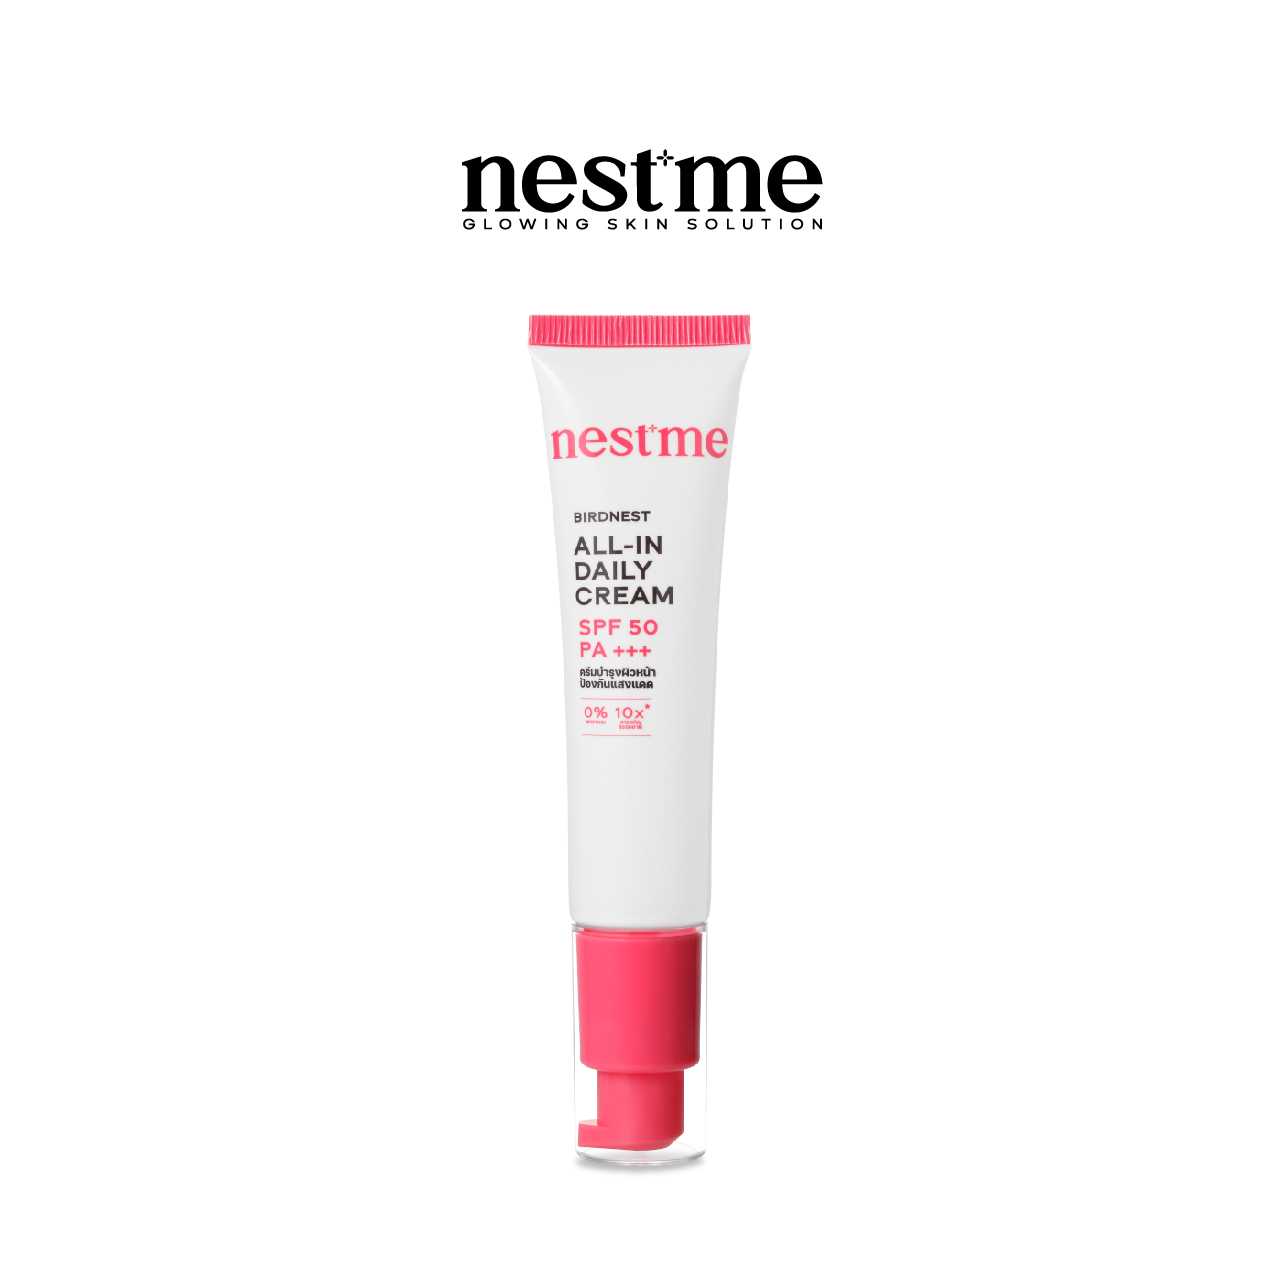 NestMe Birdnest All In Daily Cream F50 PA+++ 30g.